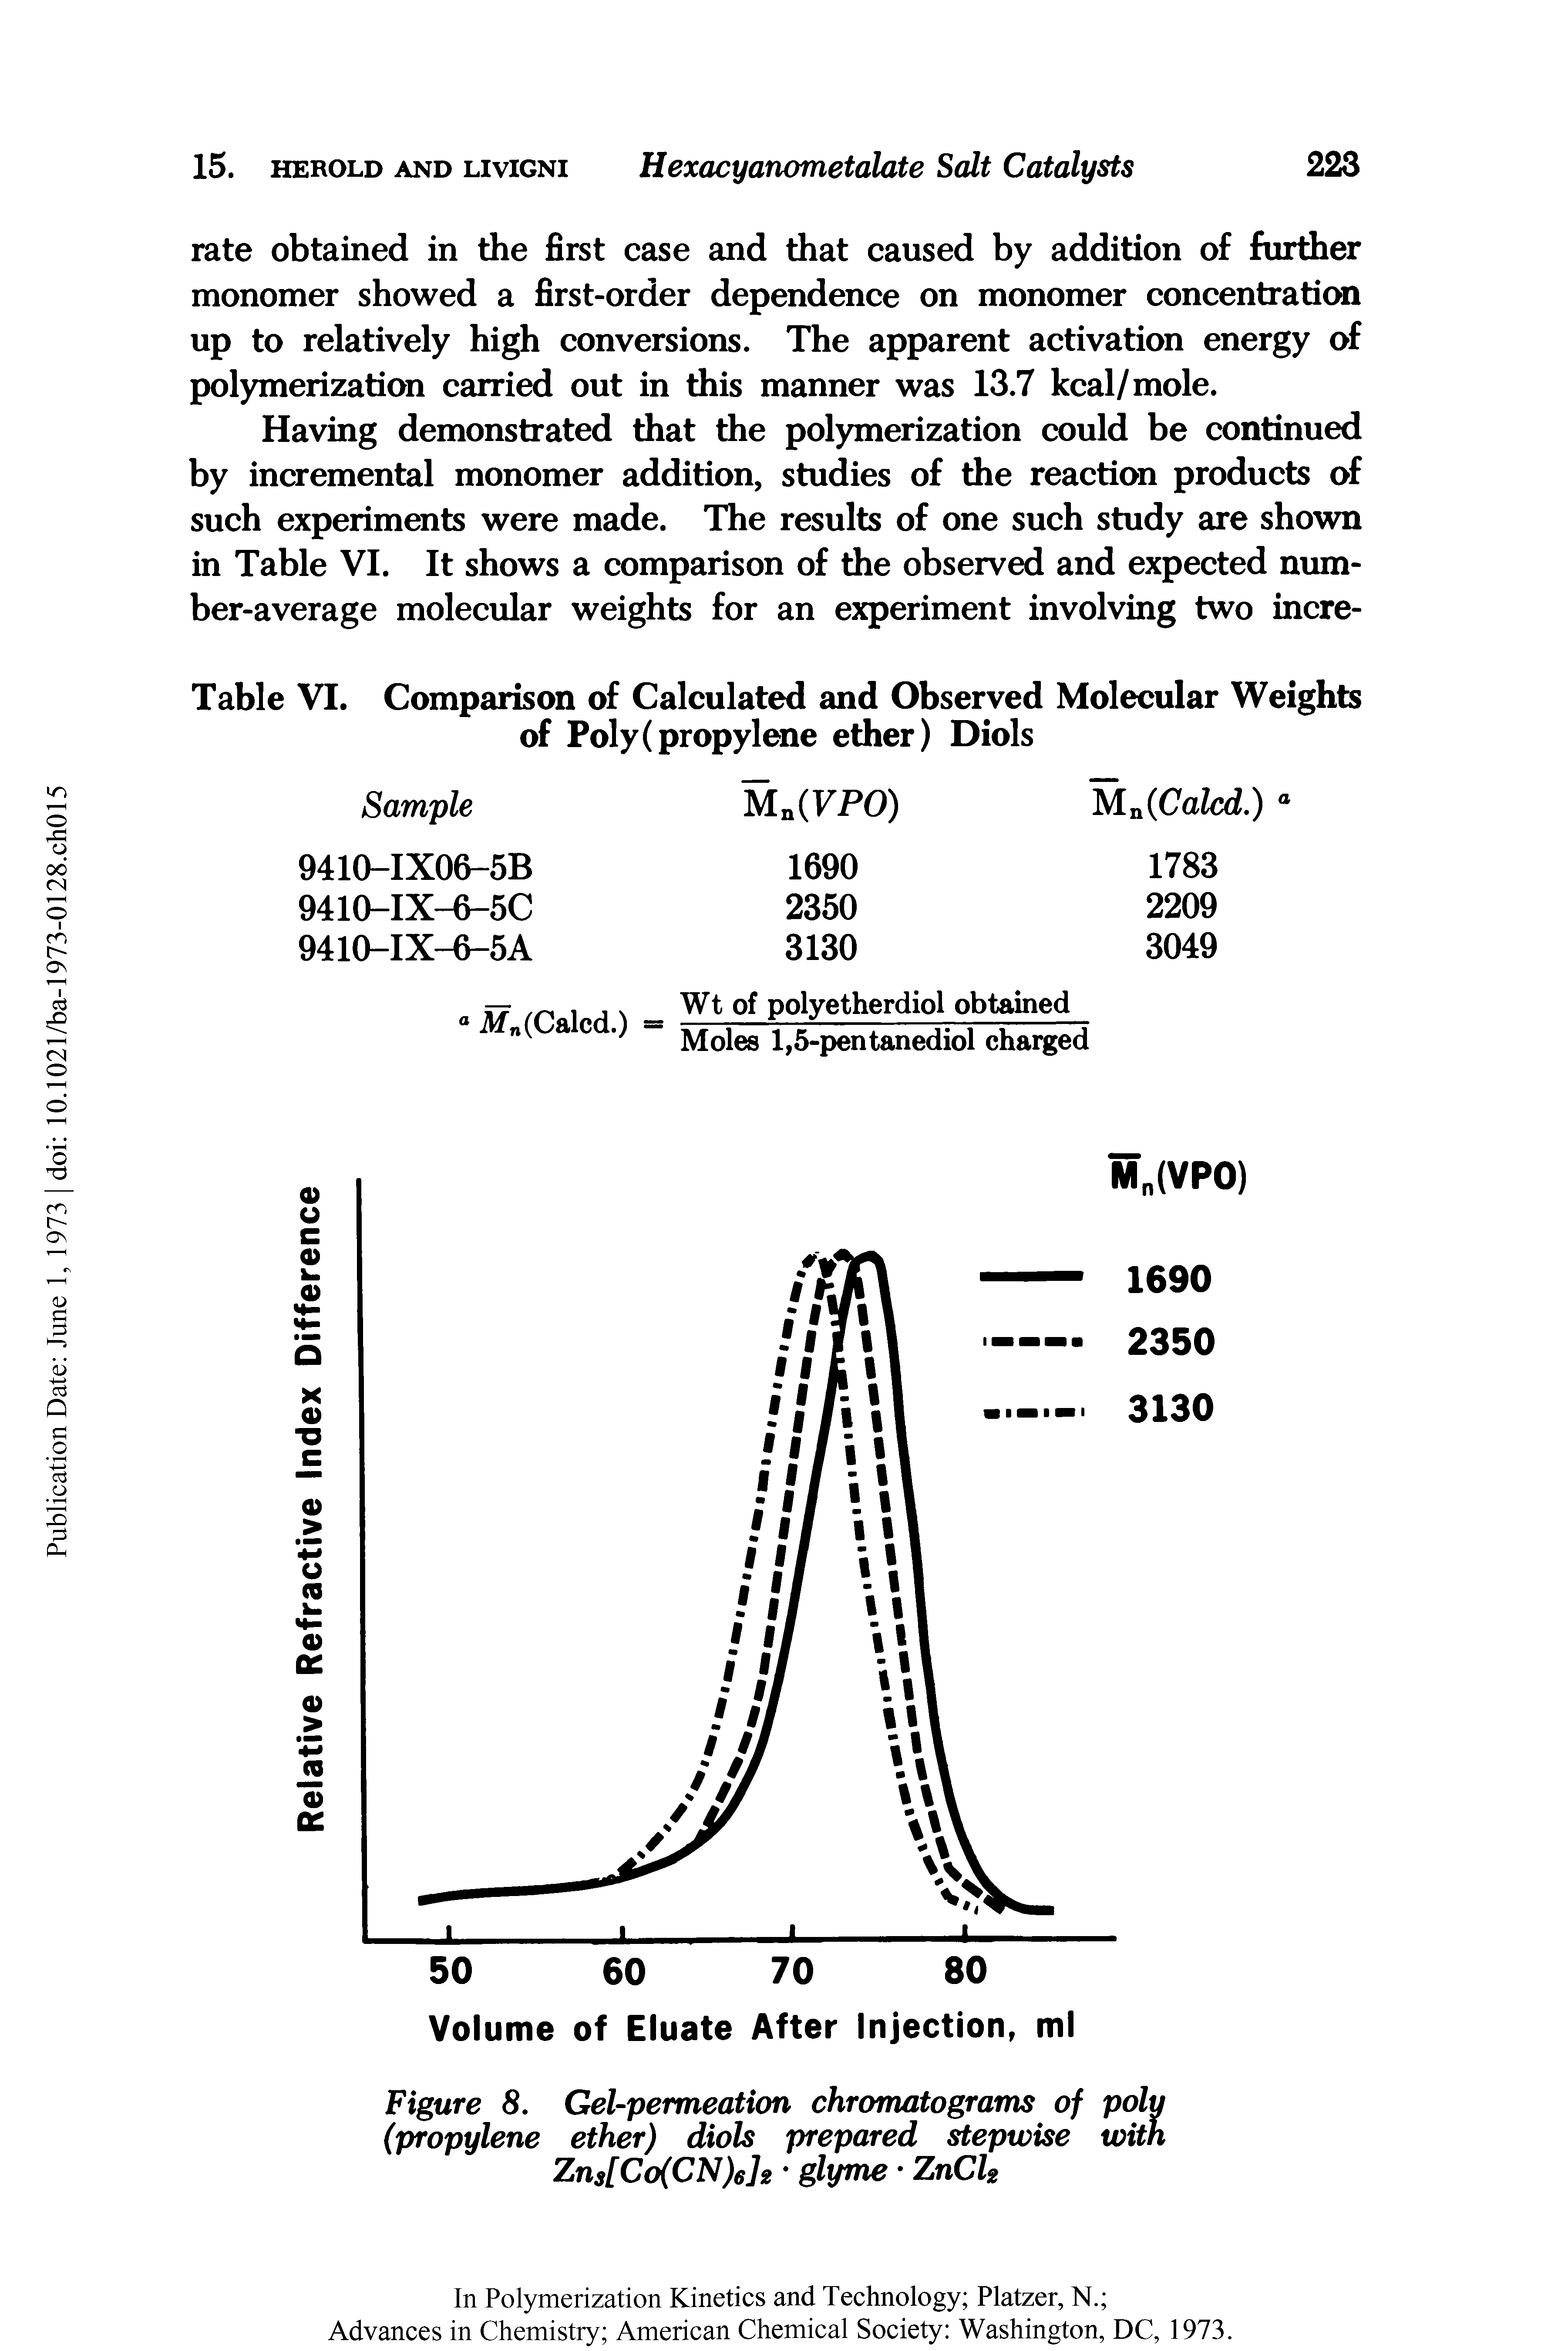 Figure 8. Gel-permeation chromatograms of polu (propylene ether) diols prepared stepwise with Zn3[Co(CN)6]2 glyme ZnCk...